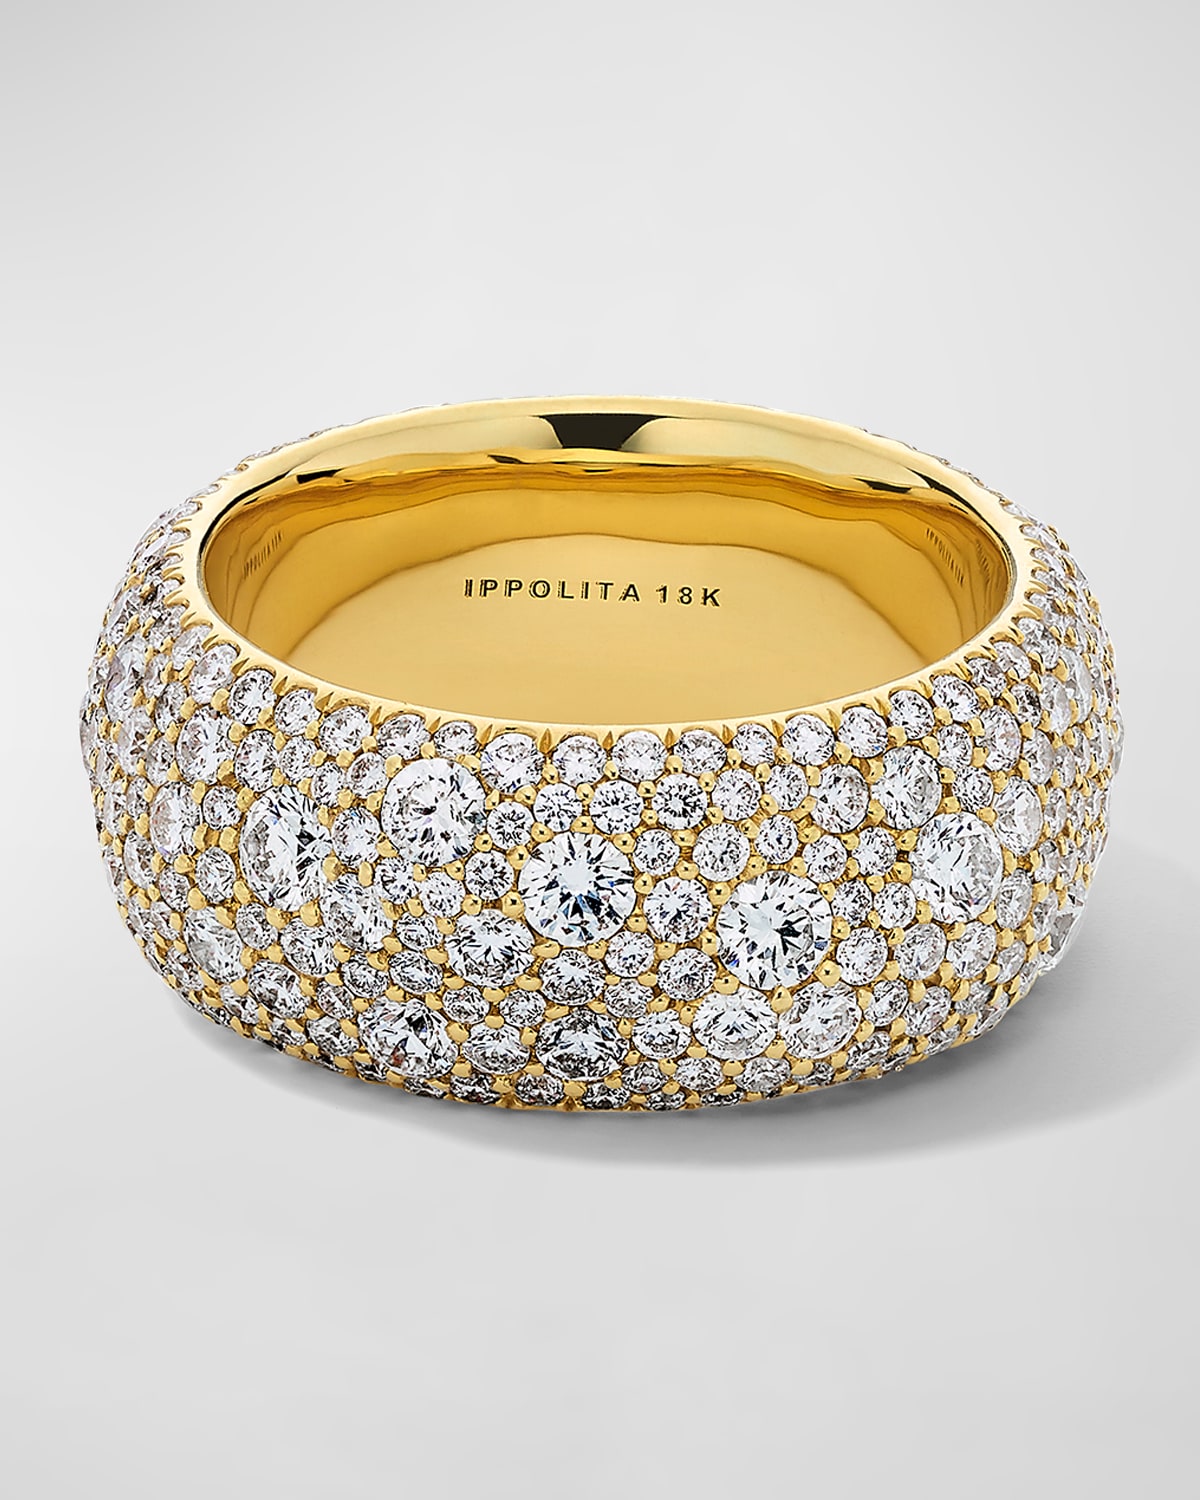 IPPOLITA 18K YELLOW GOLD DIAMOND WIDE BAND RING